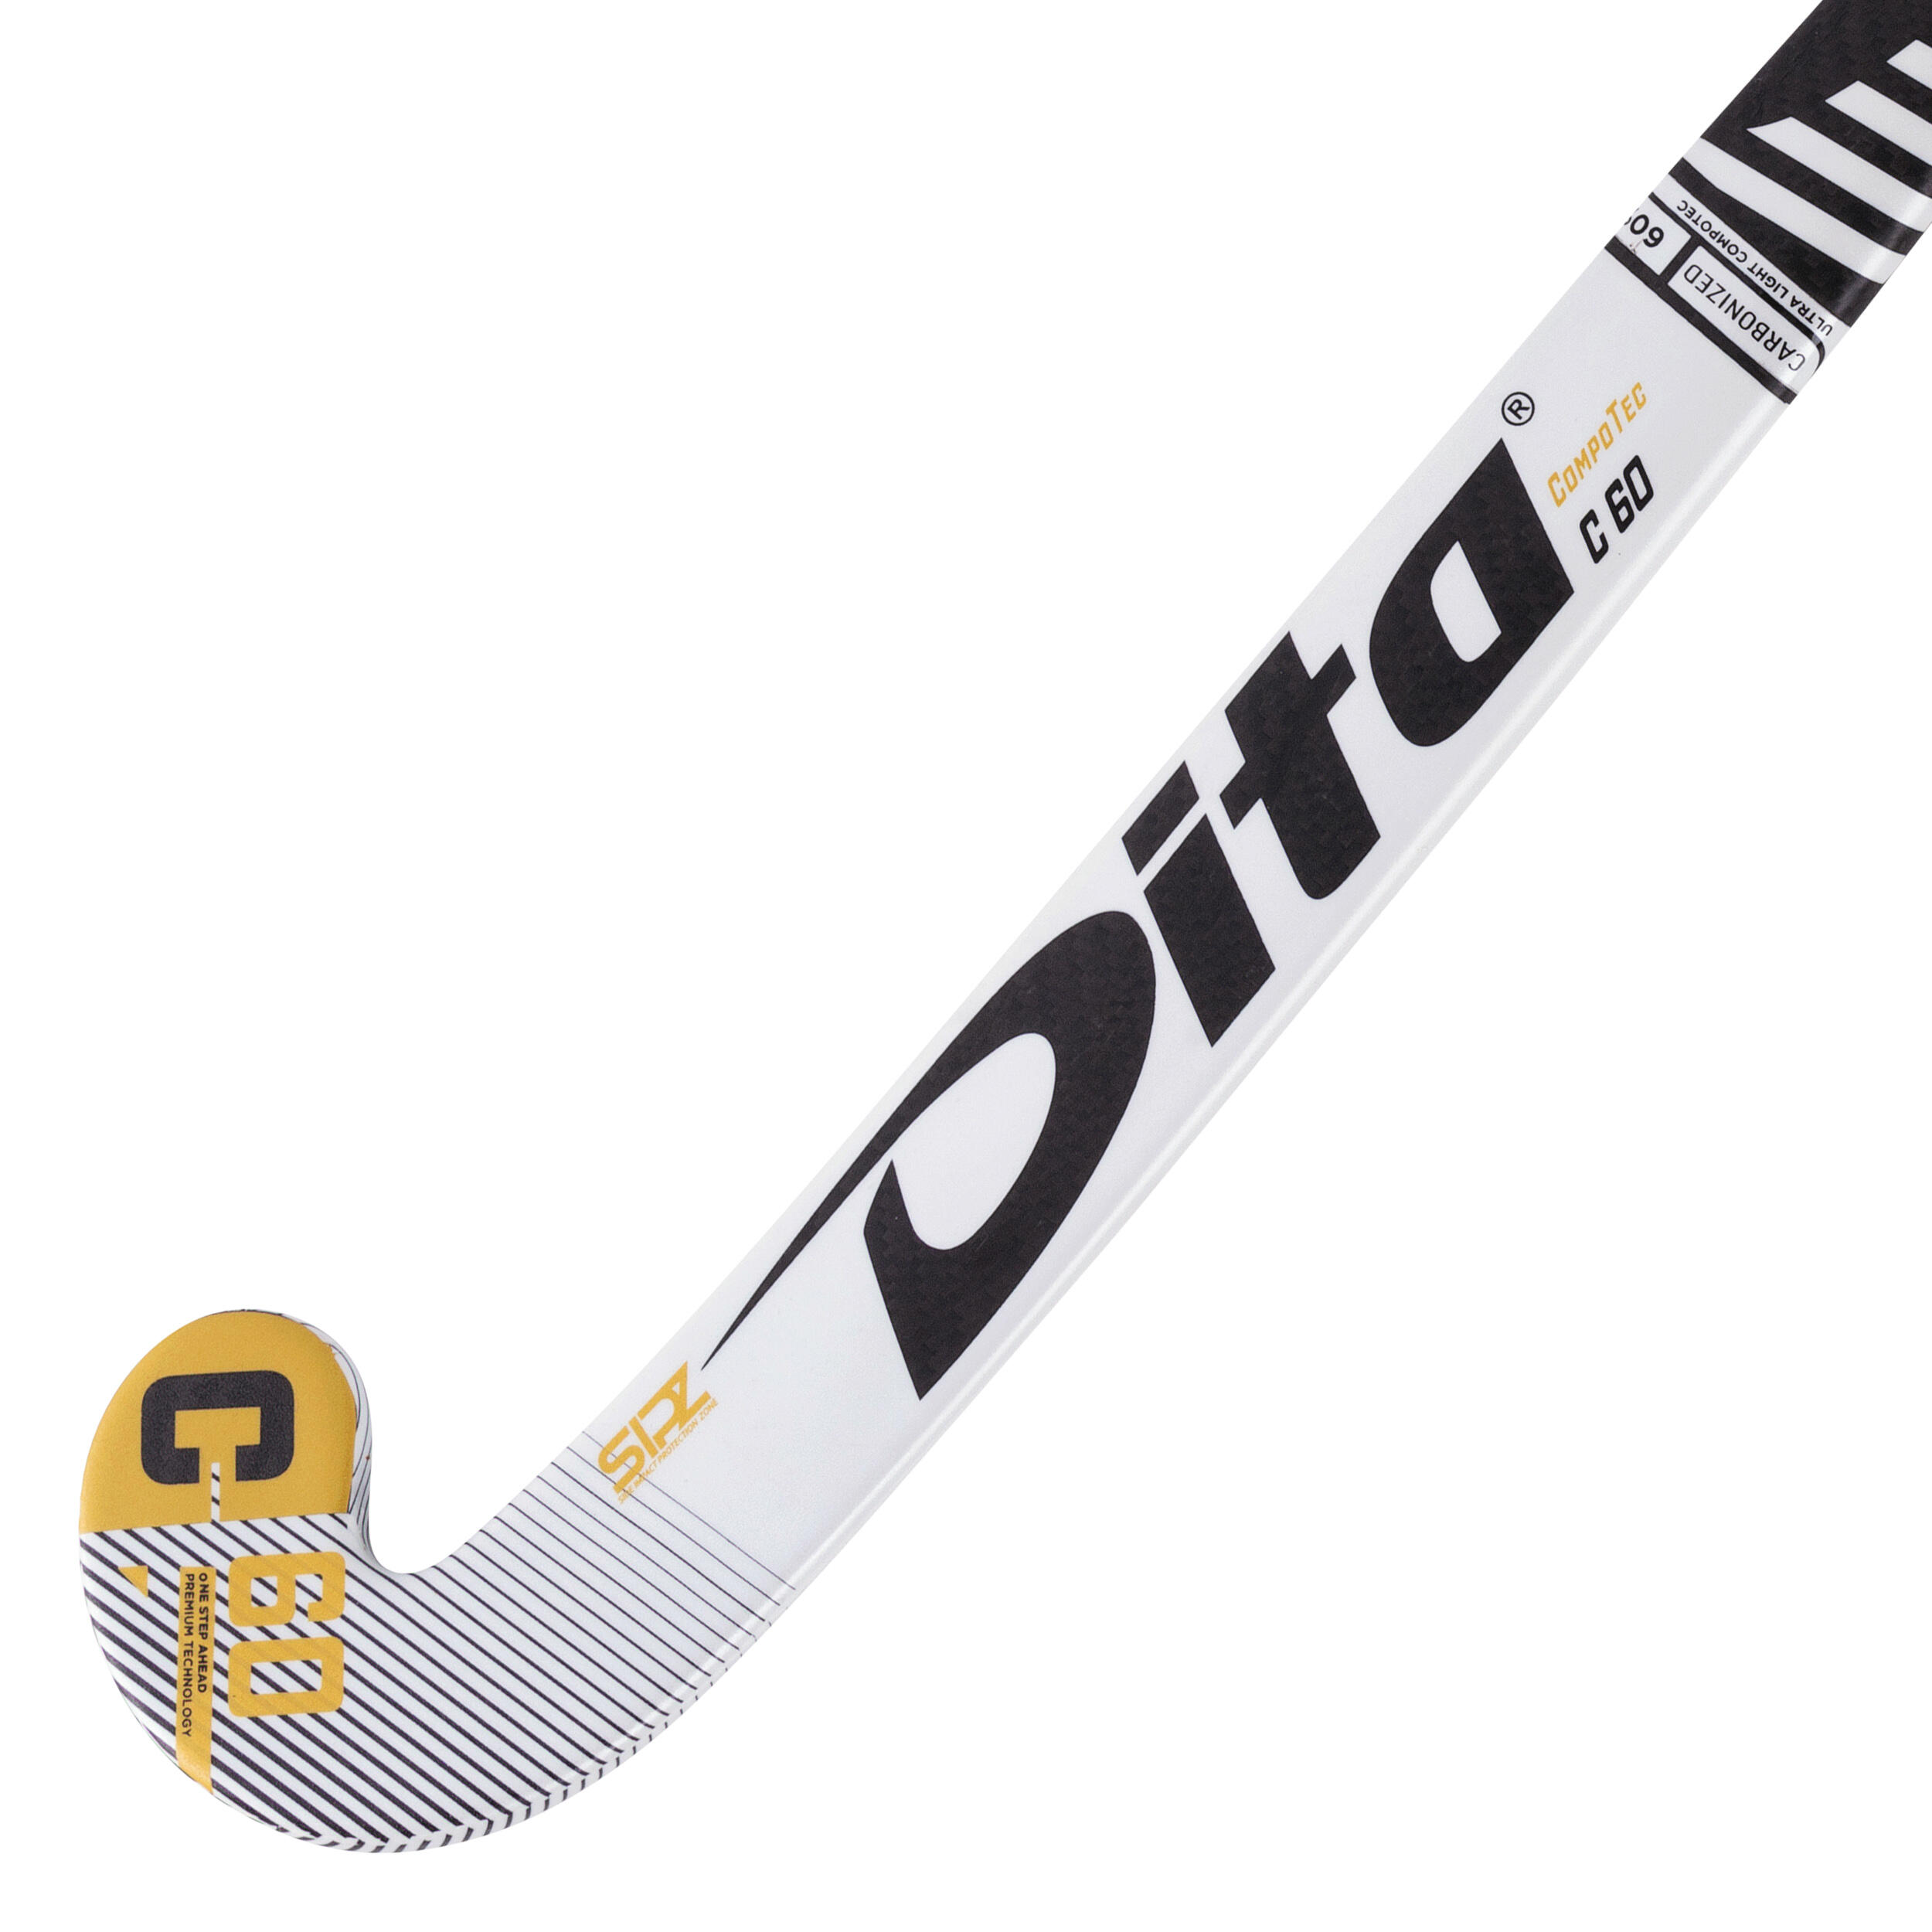 Adult Intermediate 60% Carbon Mid Bow Field Hockey Stick CompotecC60 - White/Black 3/12